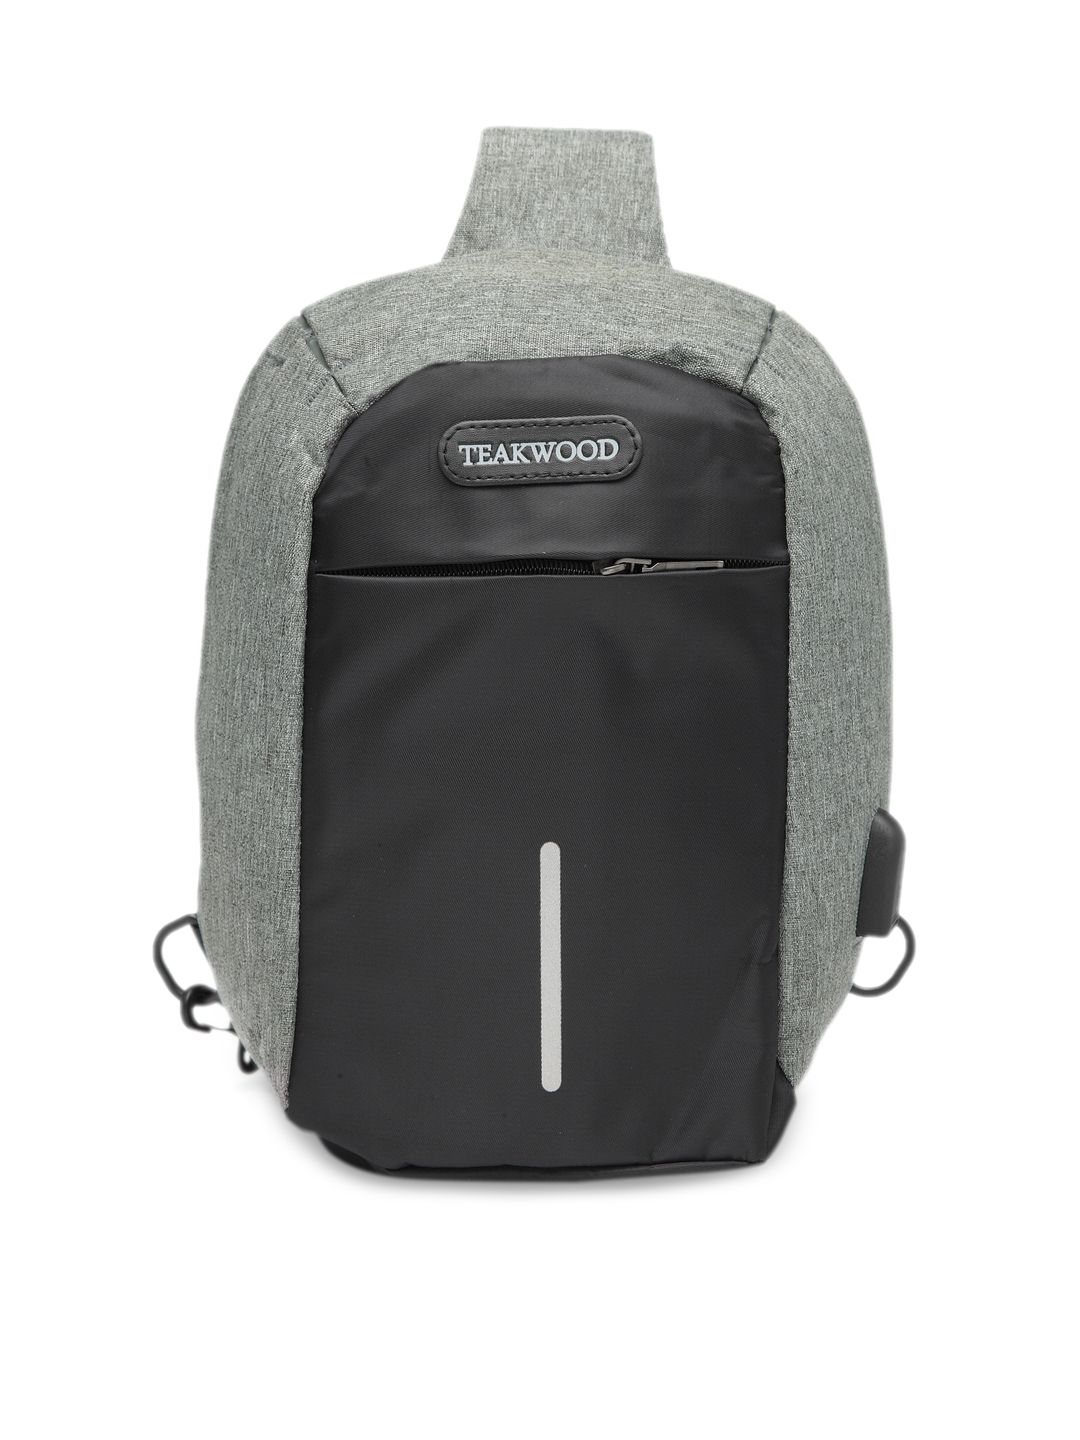 Teakwood Leathers Grey & Black Colourblocked Backpack Price in India